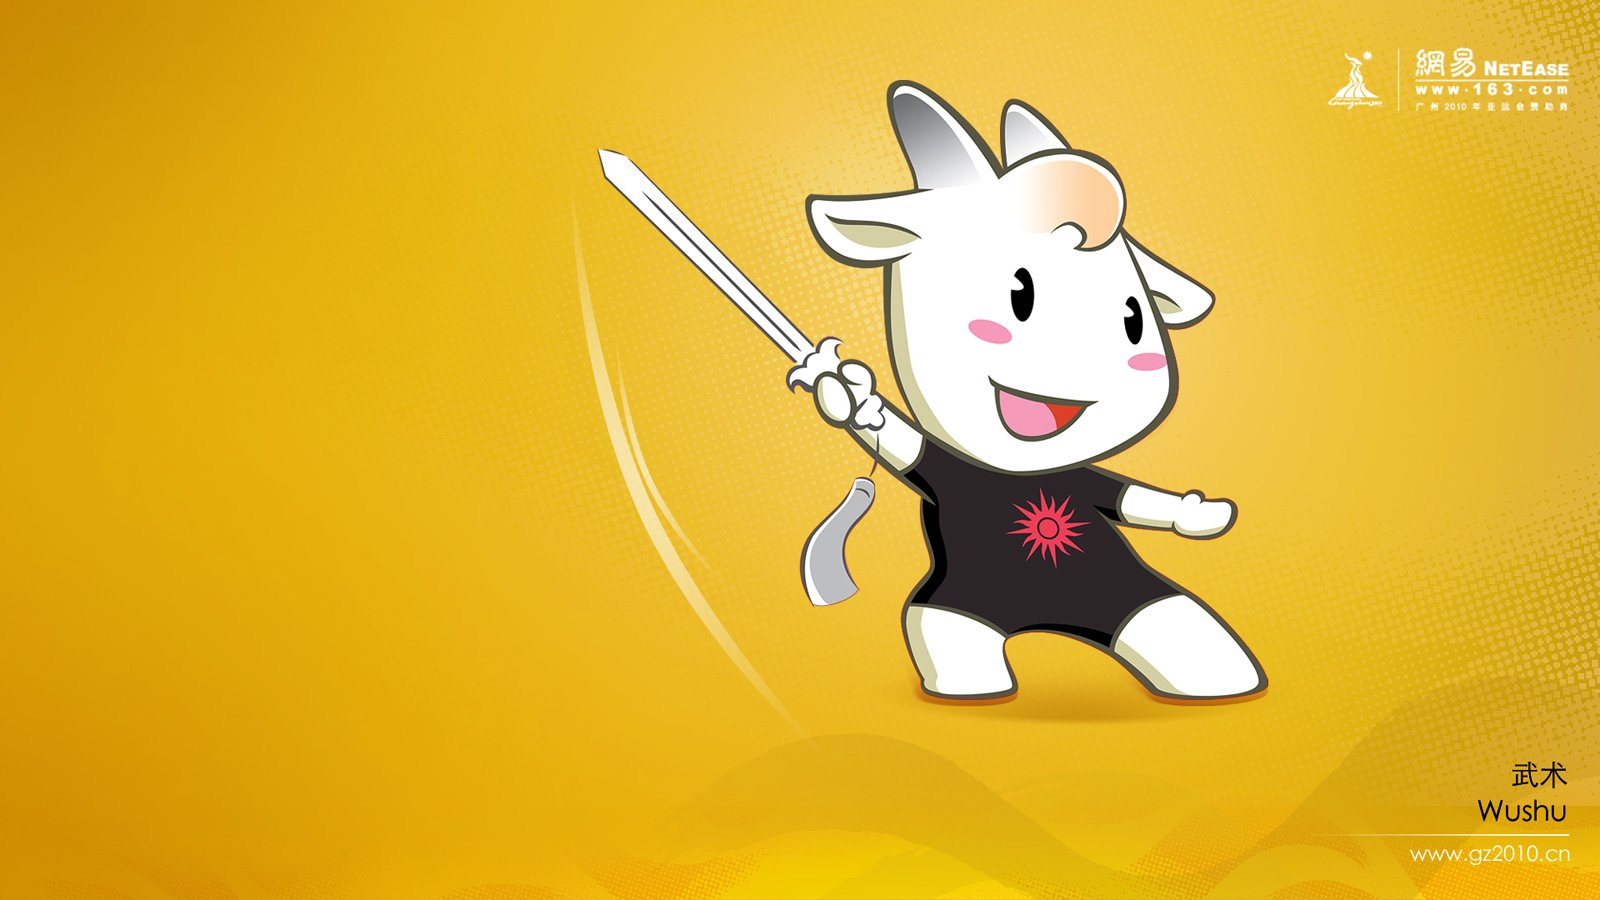 Wushu Sport Wallpaper Mascota Juegos Mundiales